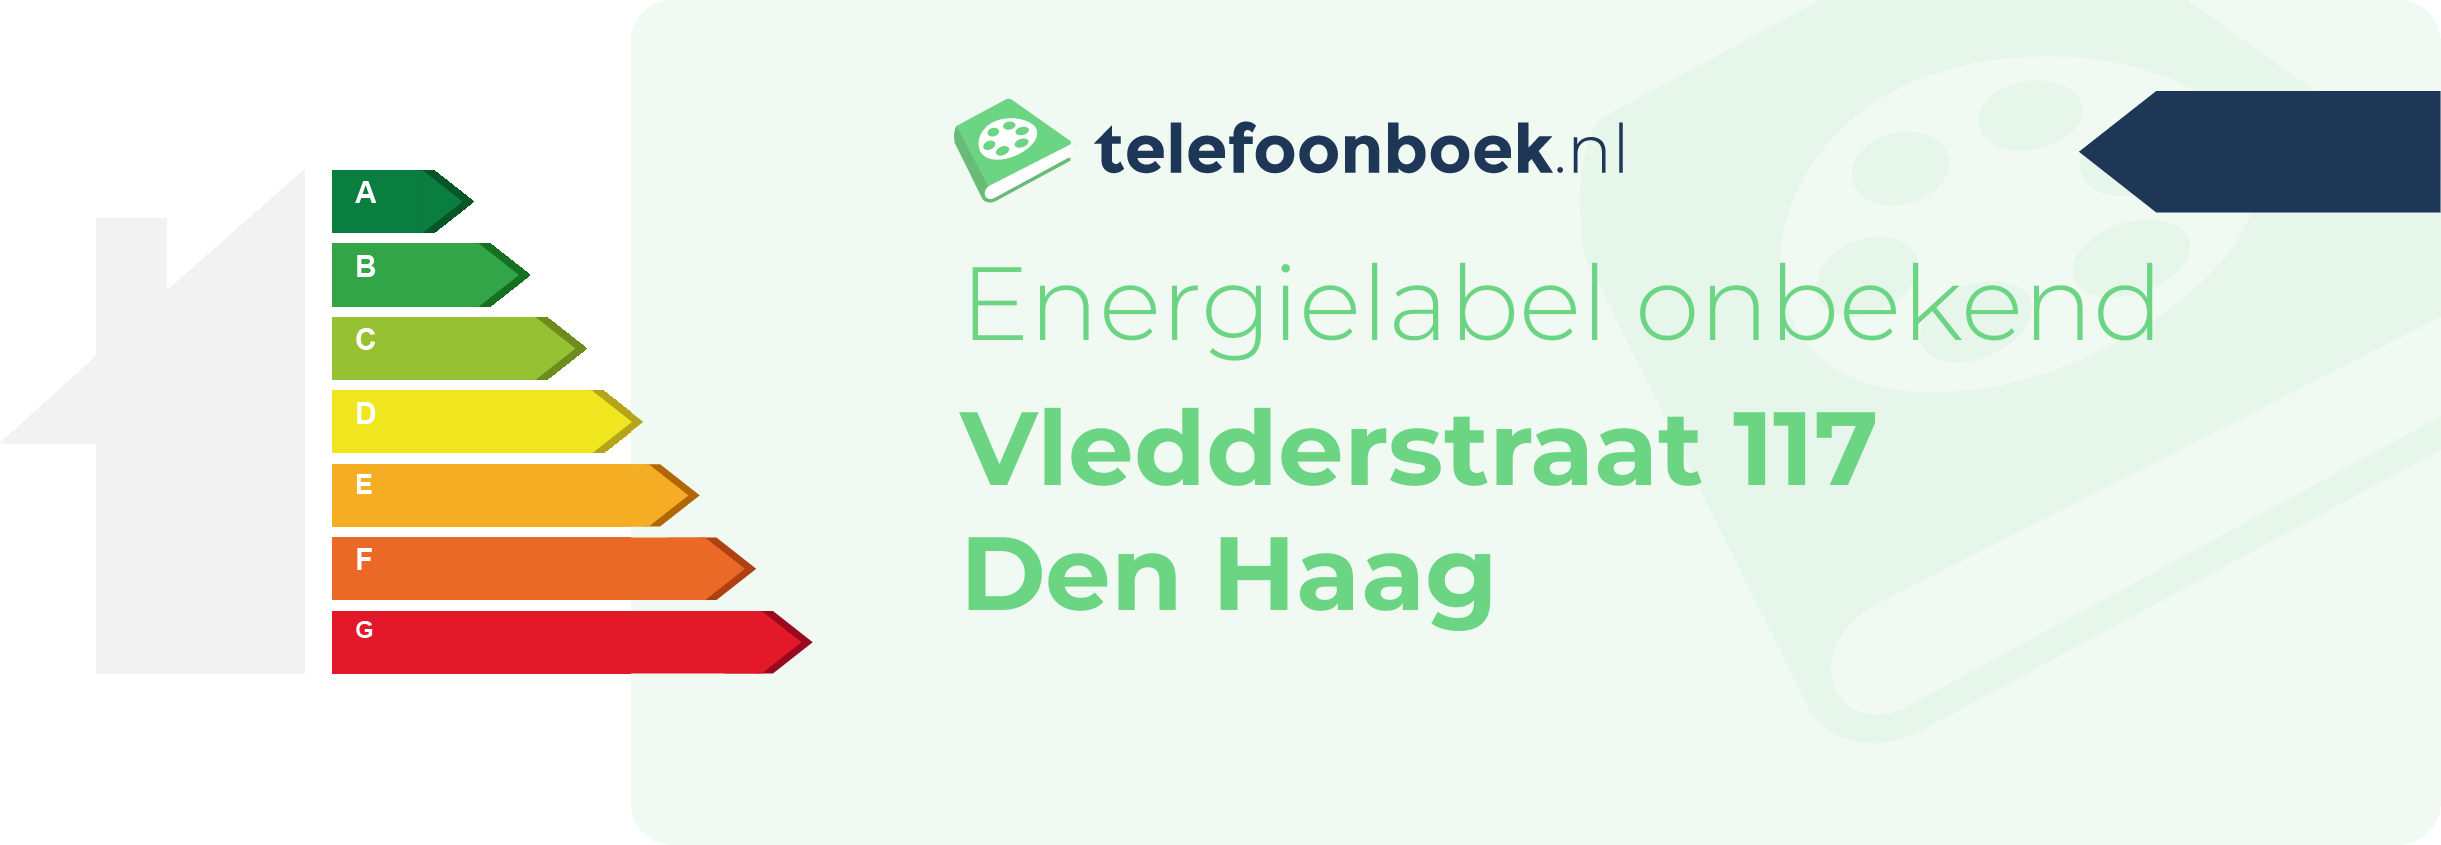 Energielabel Vledderstraat 117 Den Haag